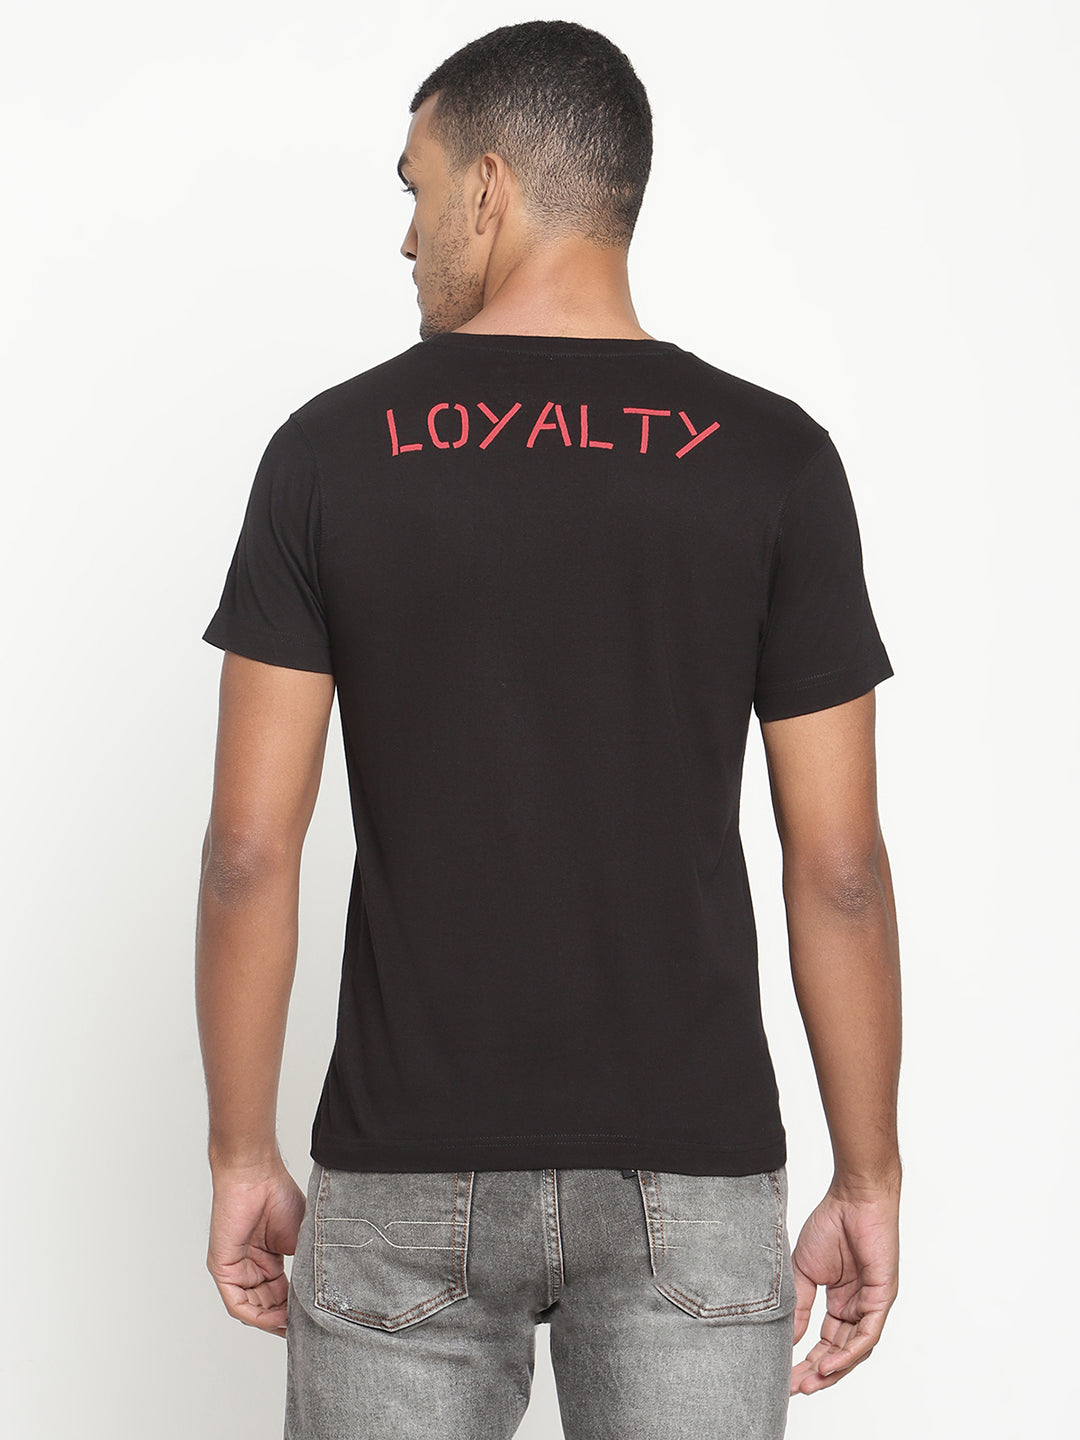 Punk LOYALTY Black T-shirt